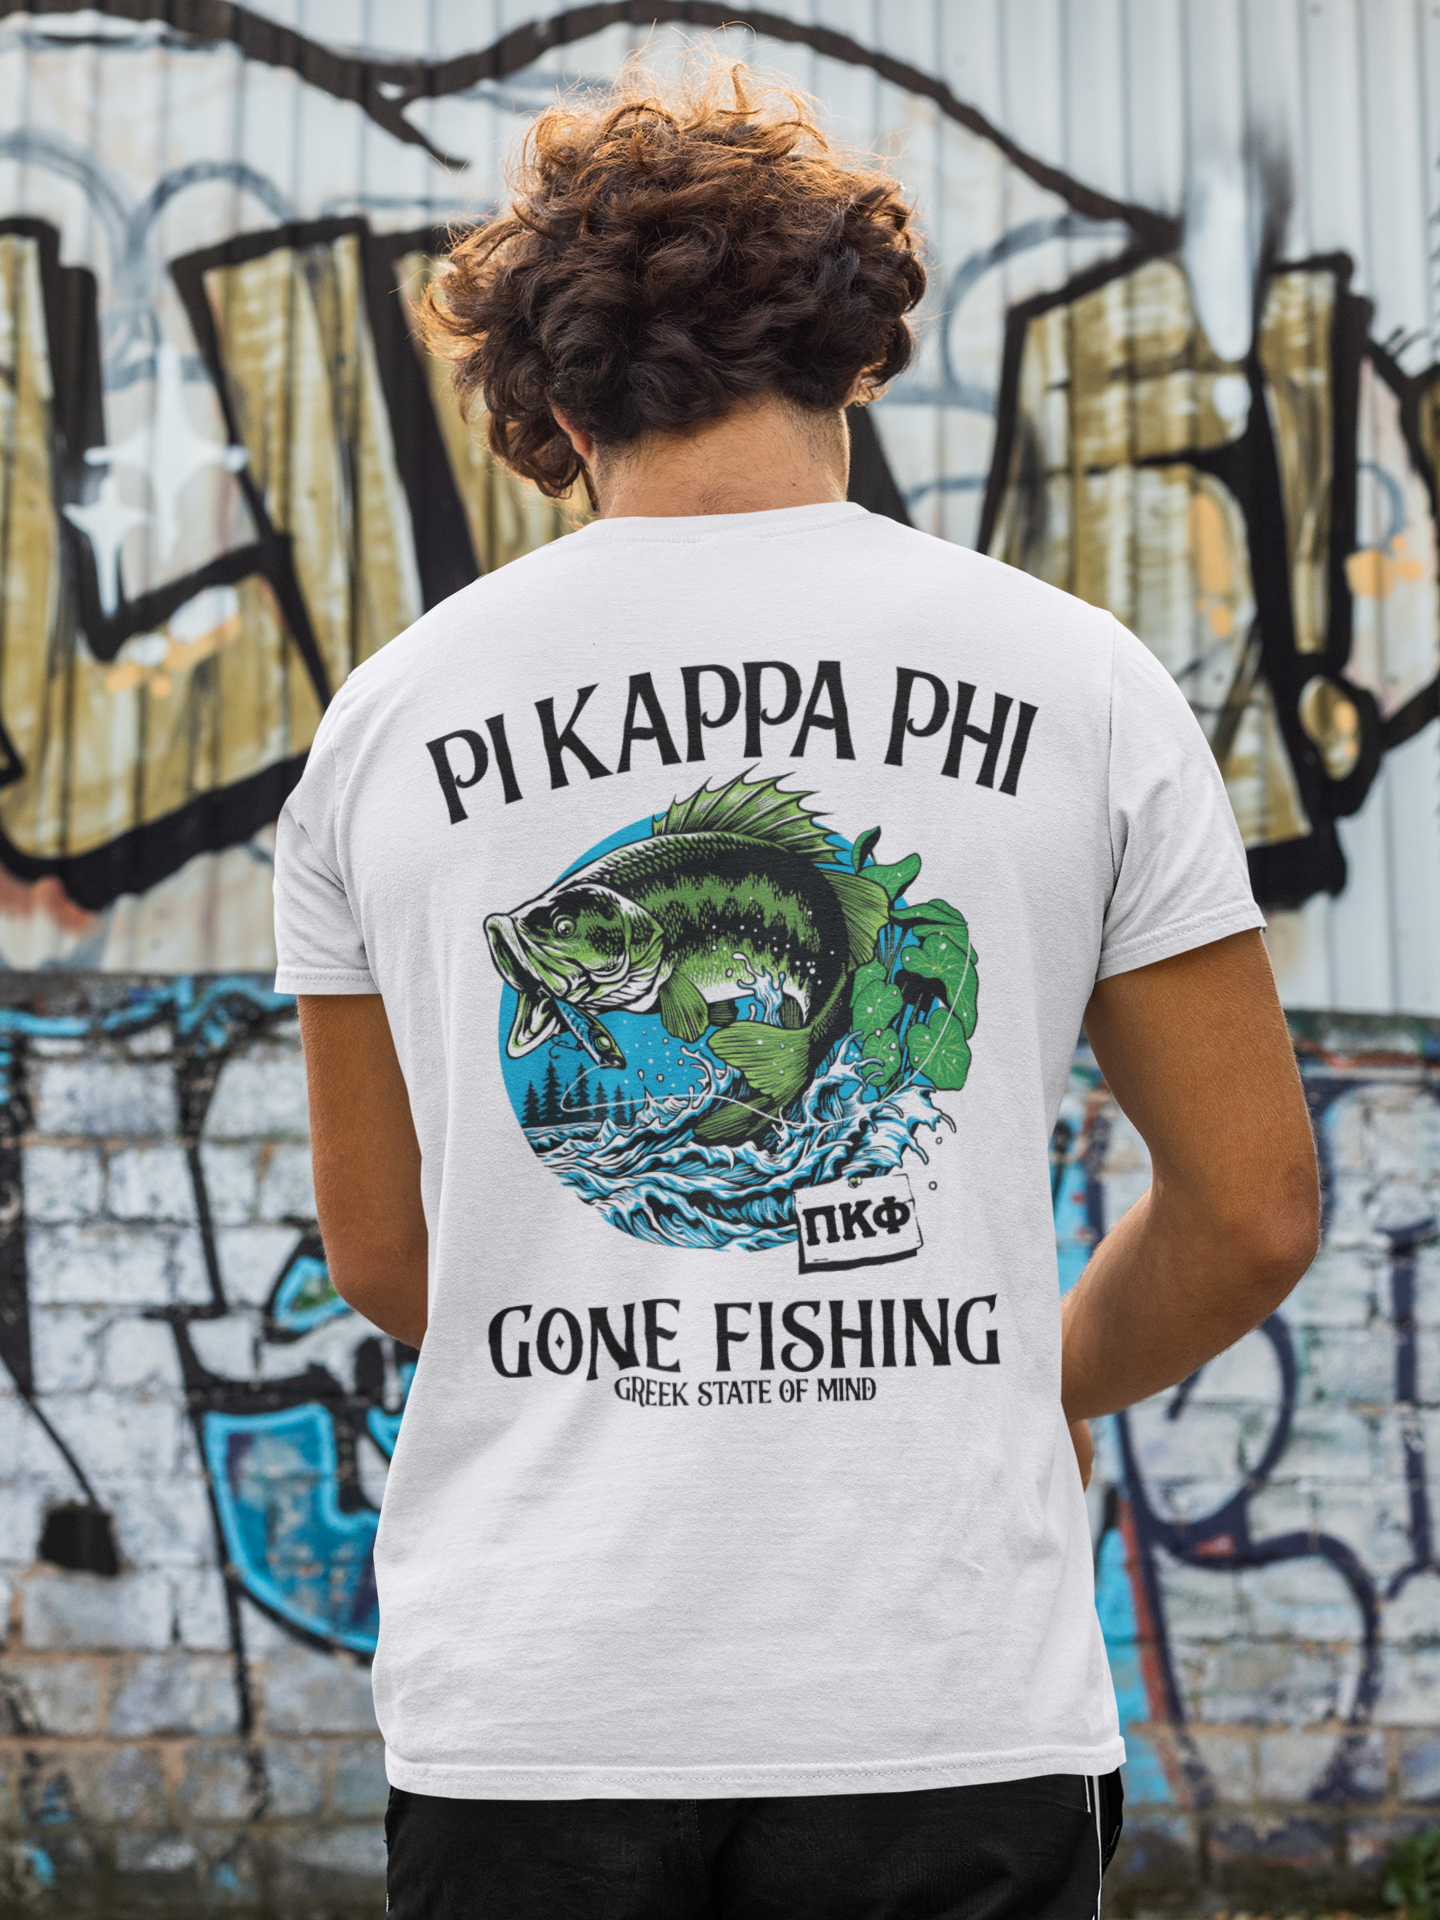 Pi Kappa Phi Graphic T-Shirt | Gone Fishing | Pi Kappa Phi Apparel and Merchandise model 